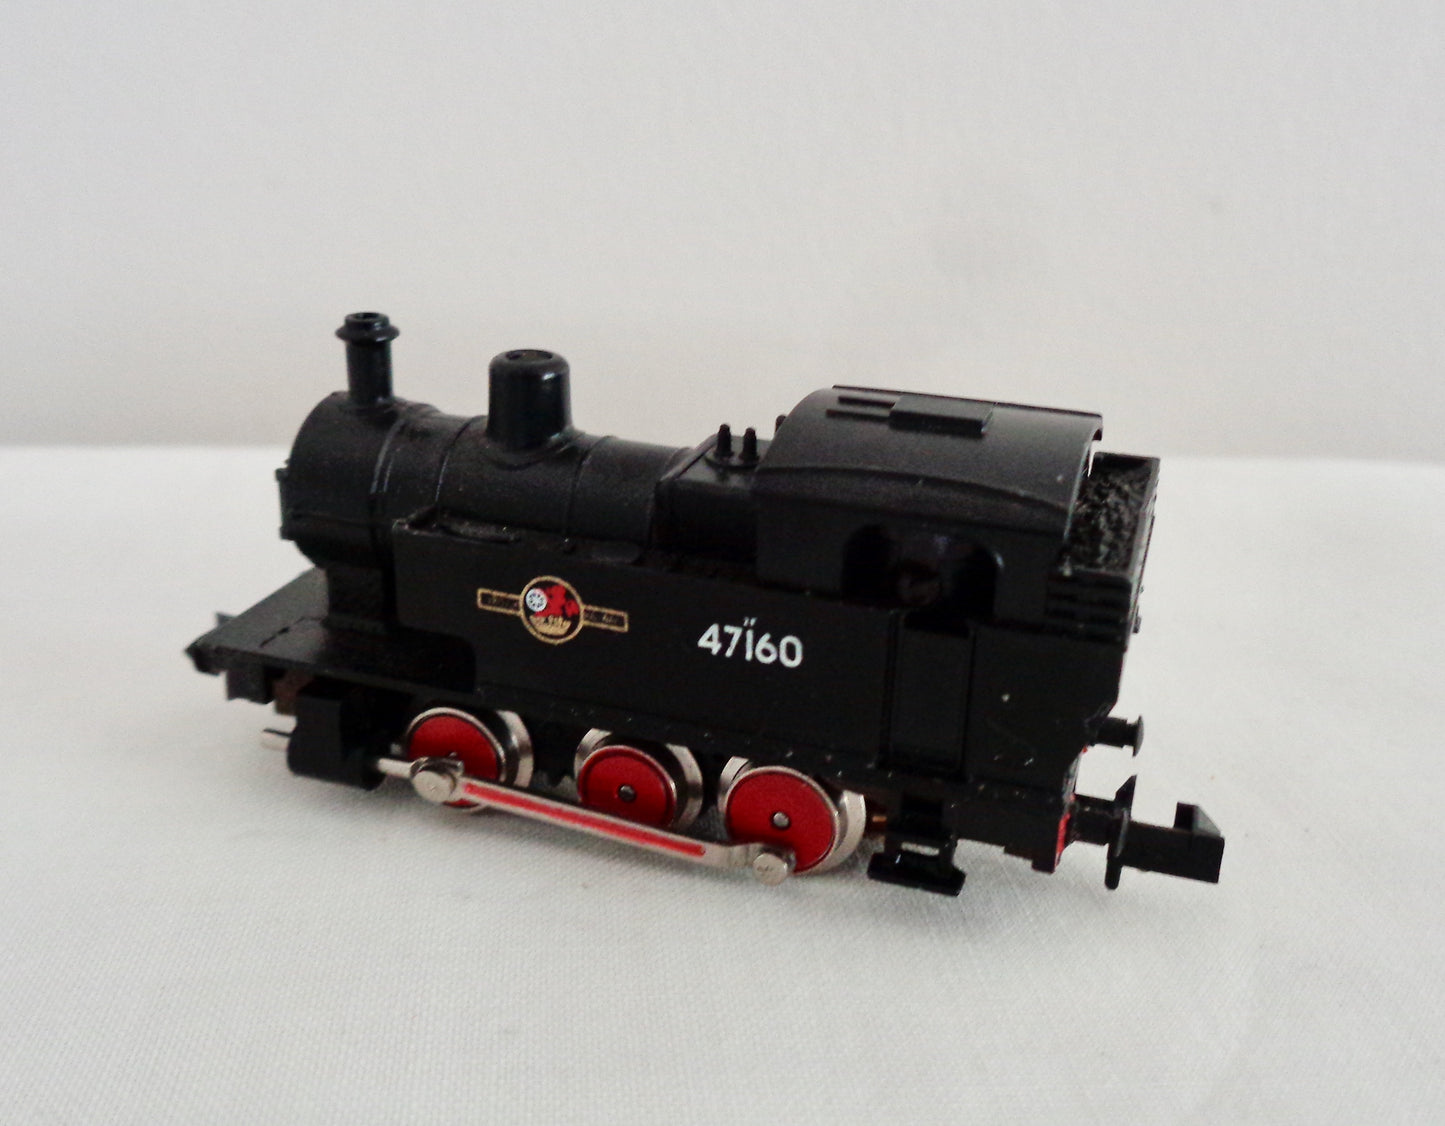 N-Gauge Minitrix BR 0-6-0T Locomotive 47160